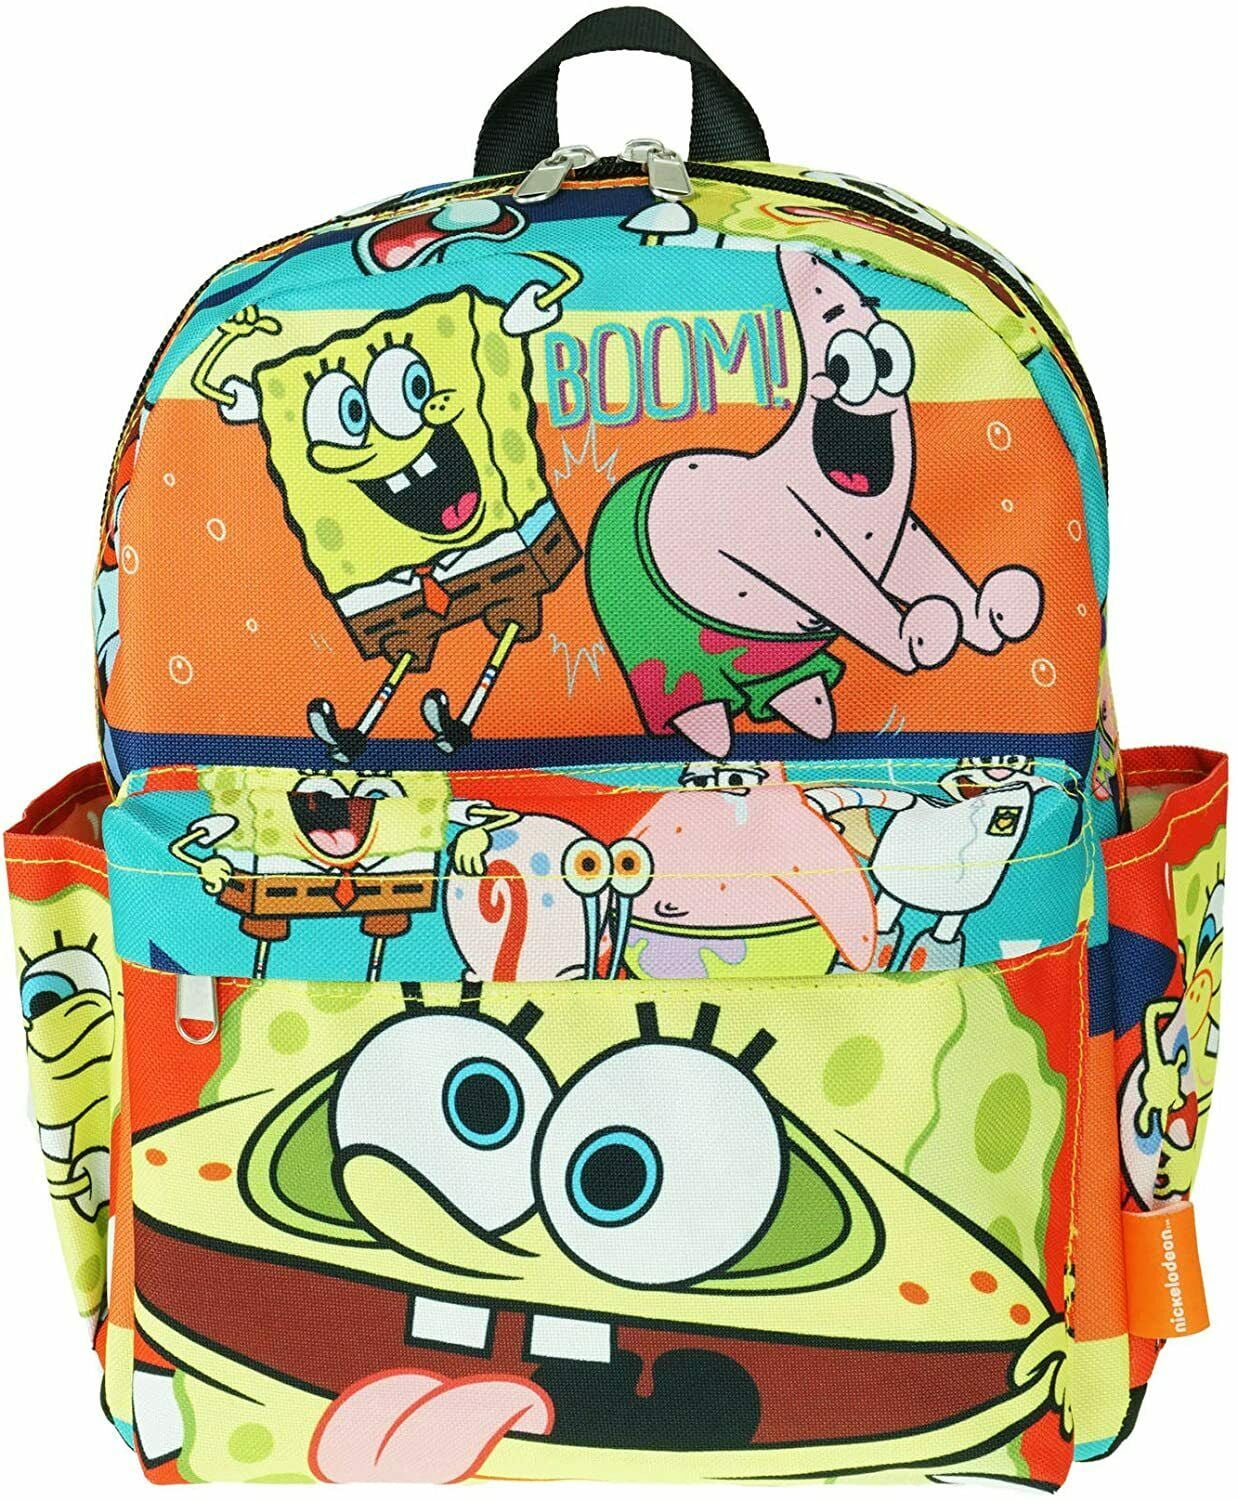 Spongebob pack. Backpack Spongebob. Рюкзак × Spongebob Squarepants old Skool III|. Sponge Bag. Spongebob with Bagpack.